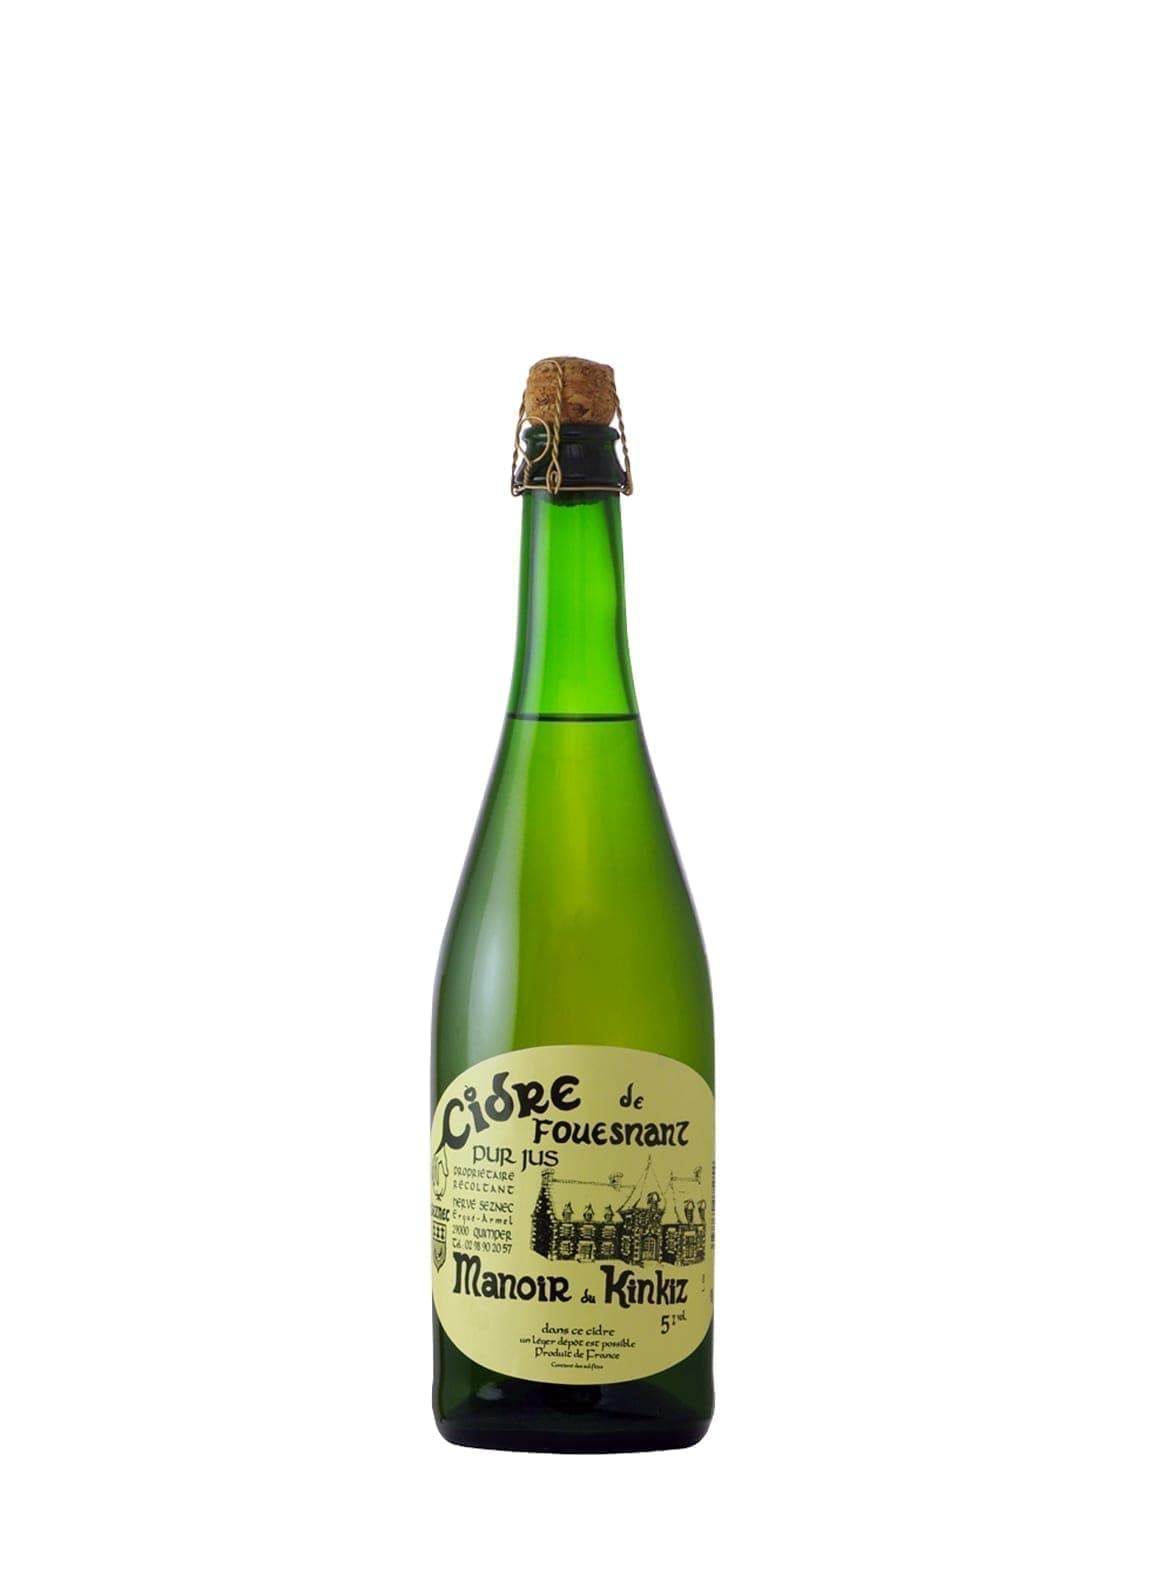 Manoir Kinkiz Cidre 'Fouesnant' (semi-dry apple cider) 6% 375ml | Hard Cider | Shop online at Spirits of France